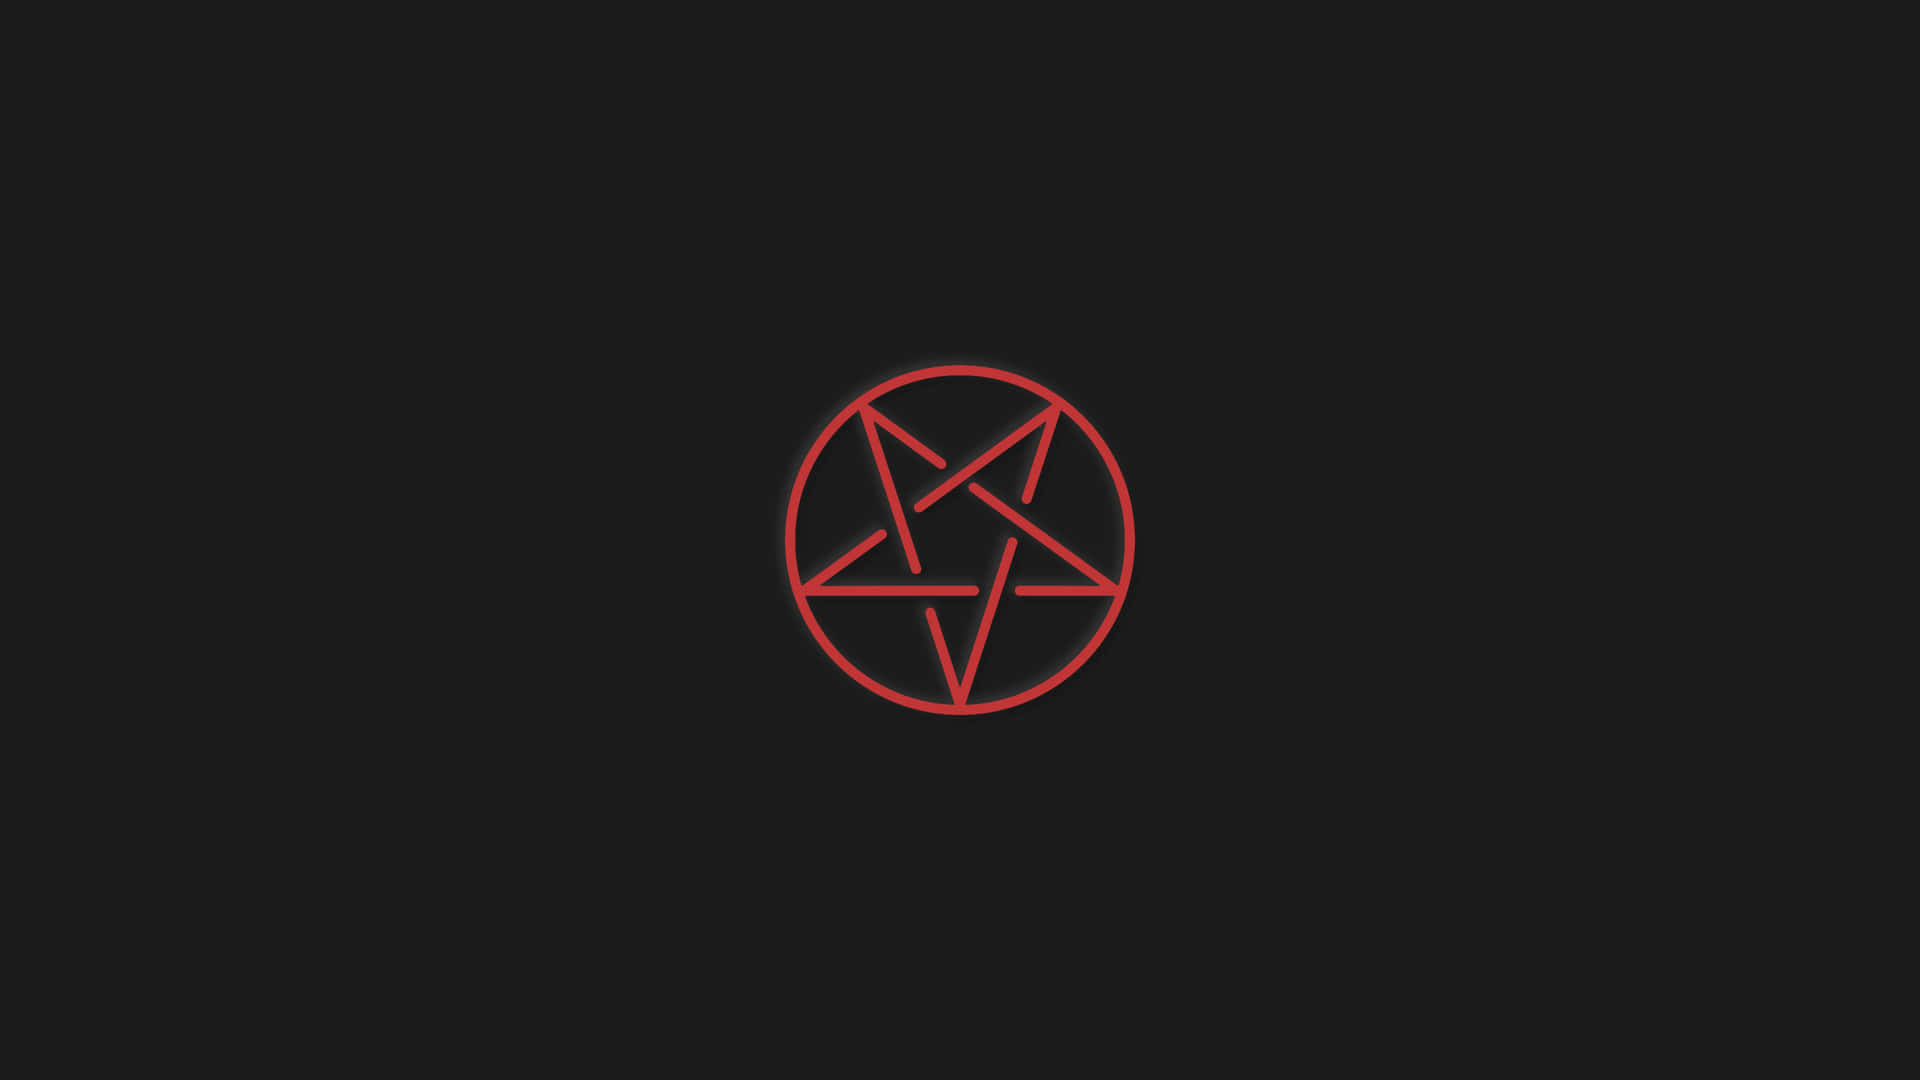 Red Pentagramon Black Background Wallpaper